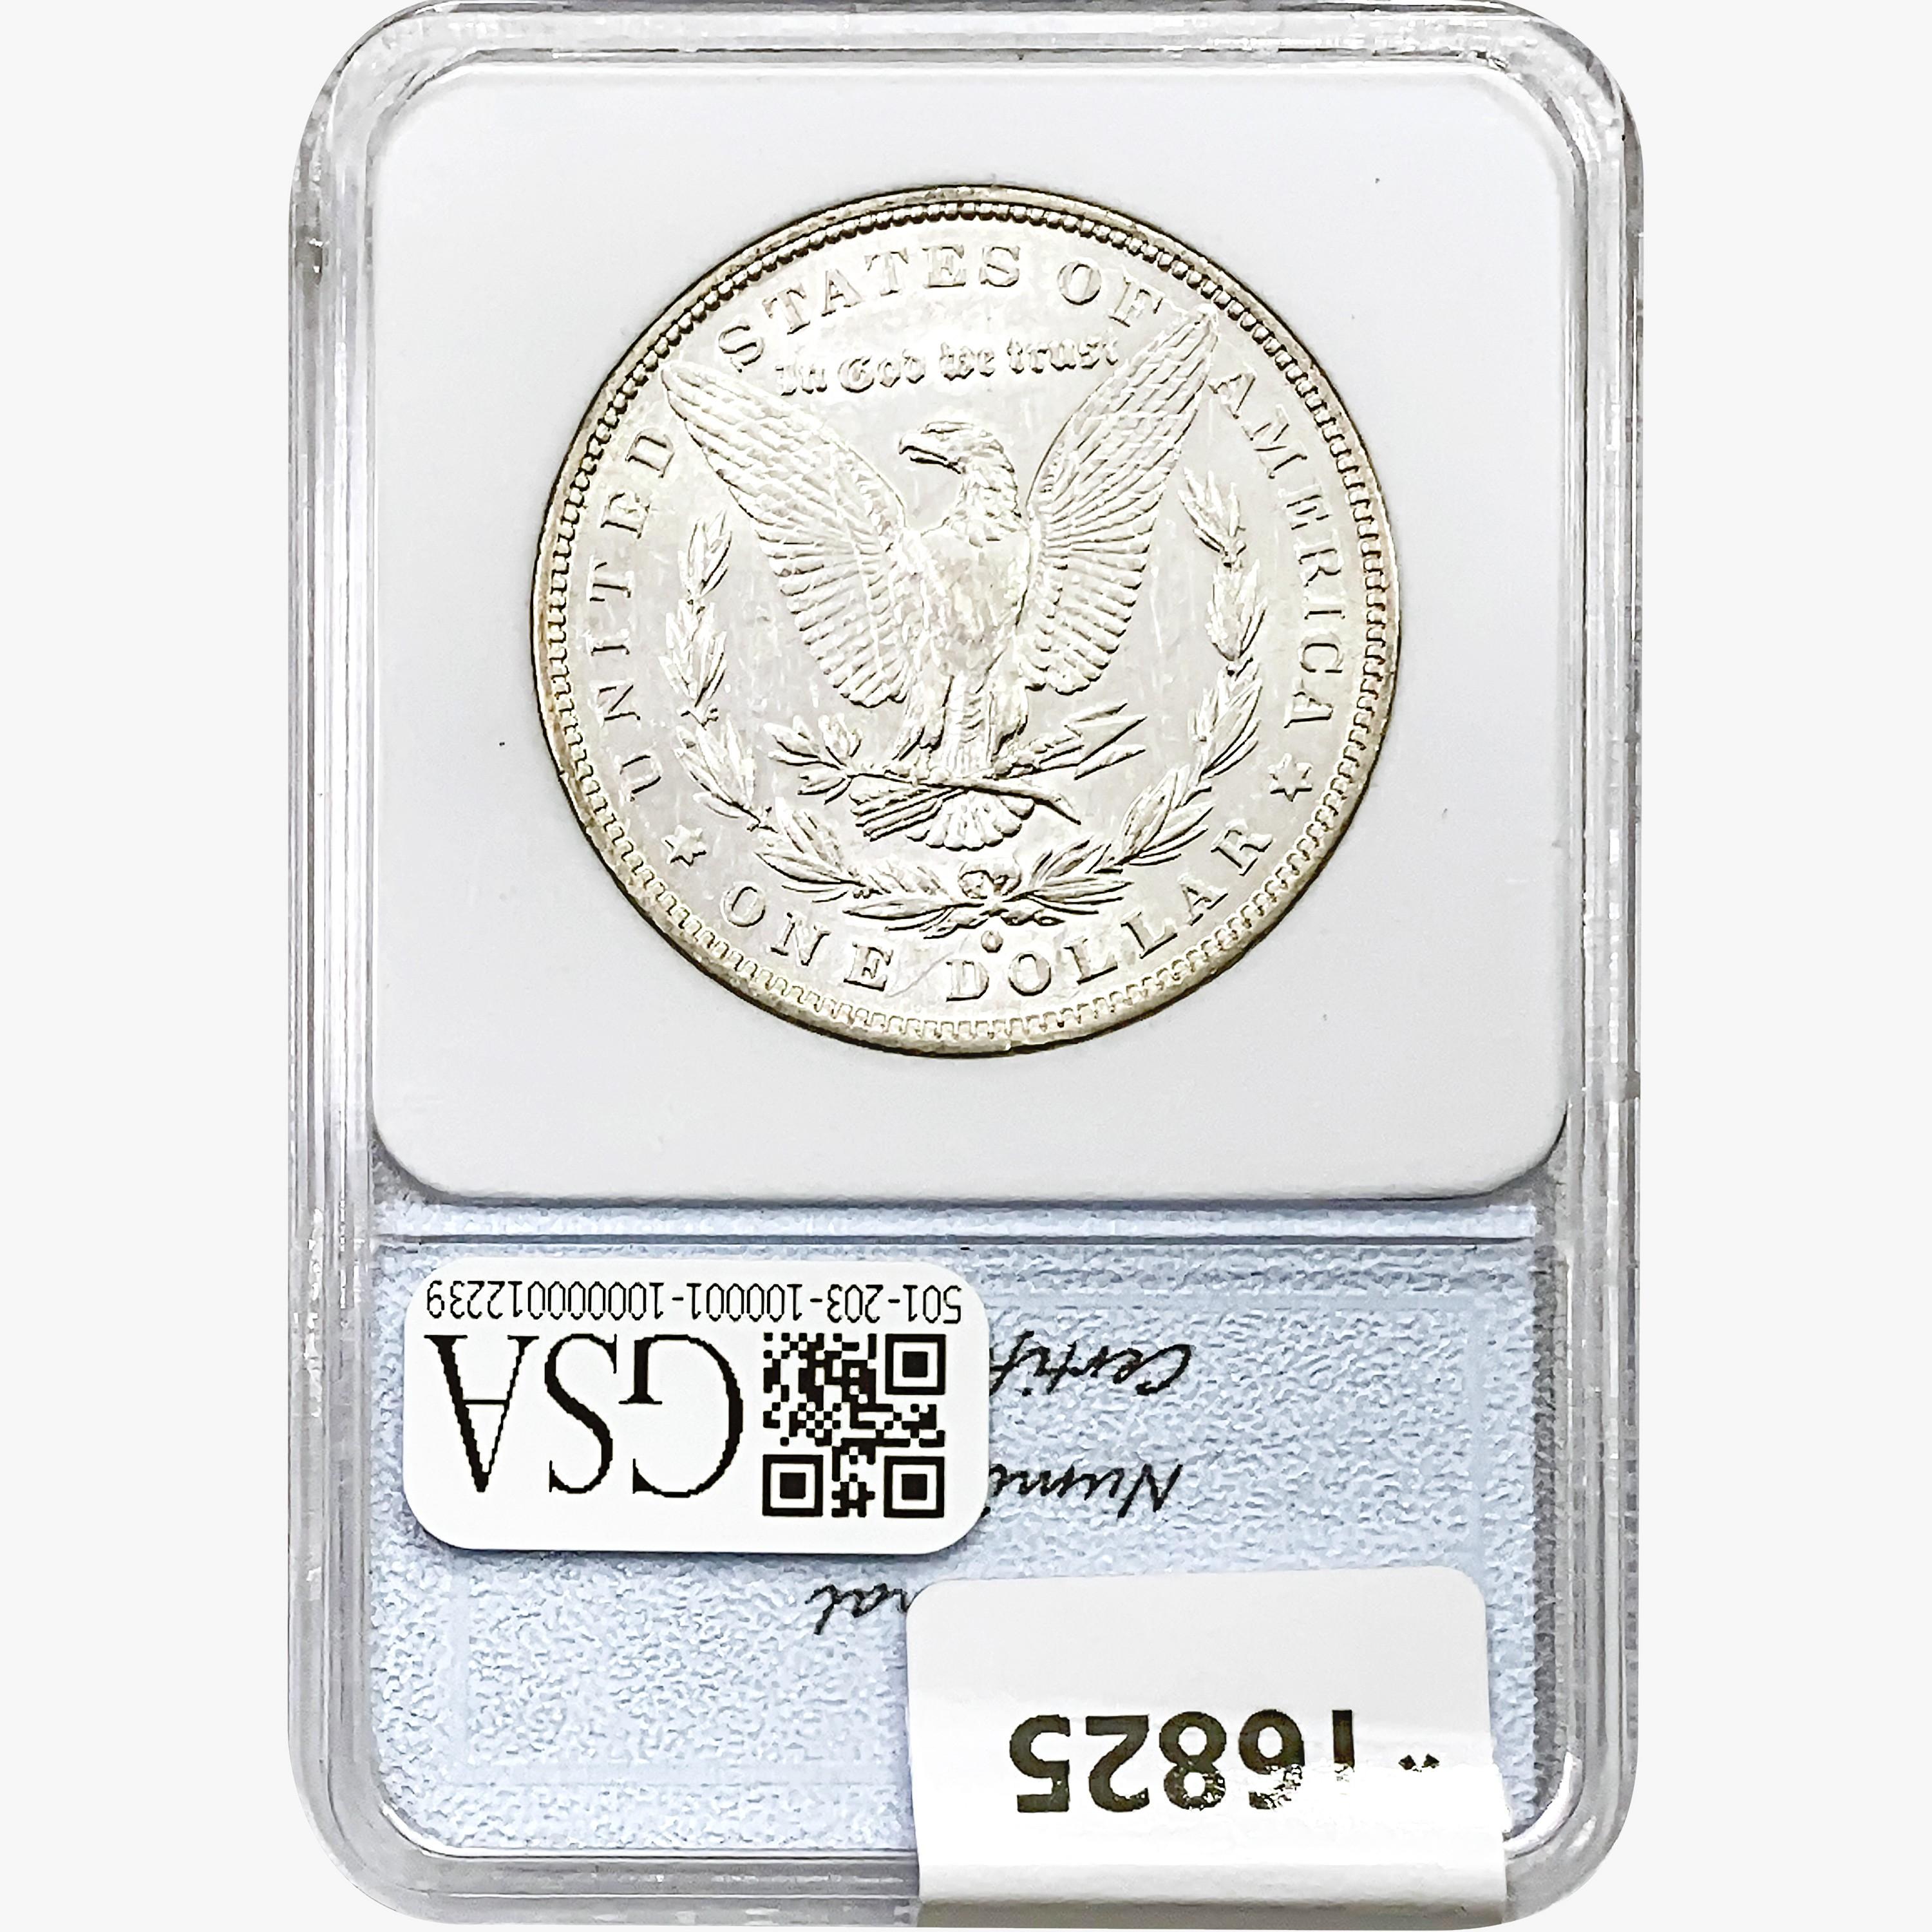 1880-O Morgan Silver Dollar NNC MS64